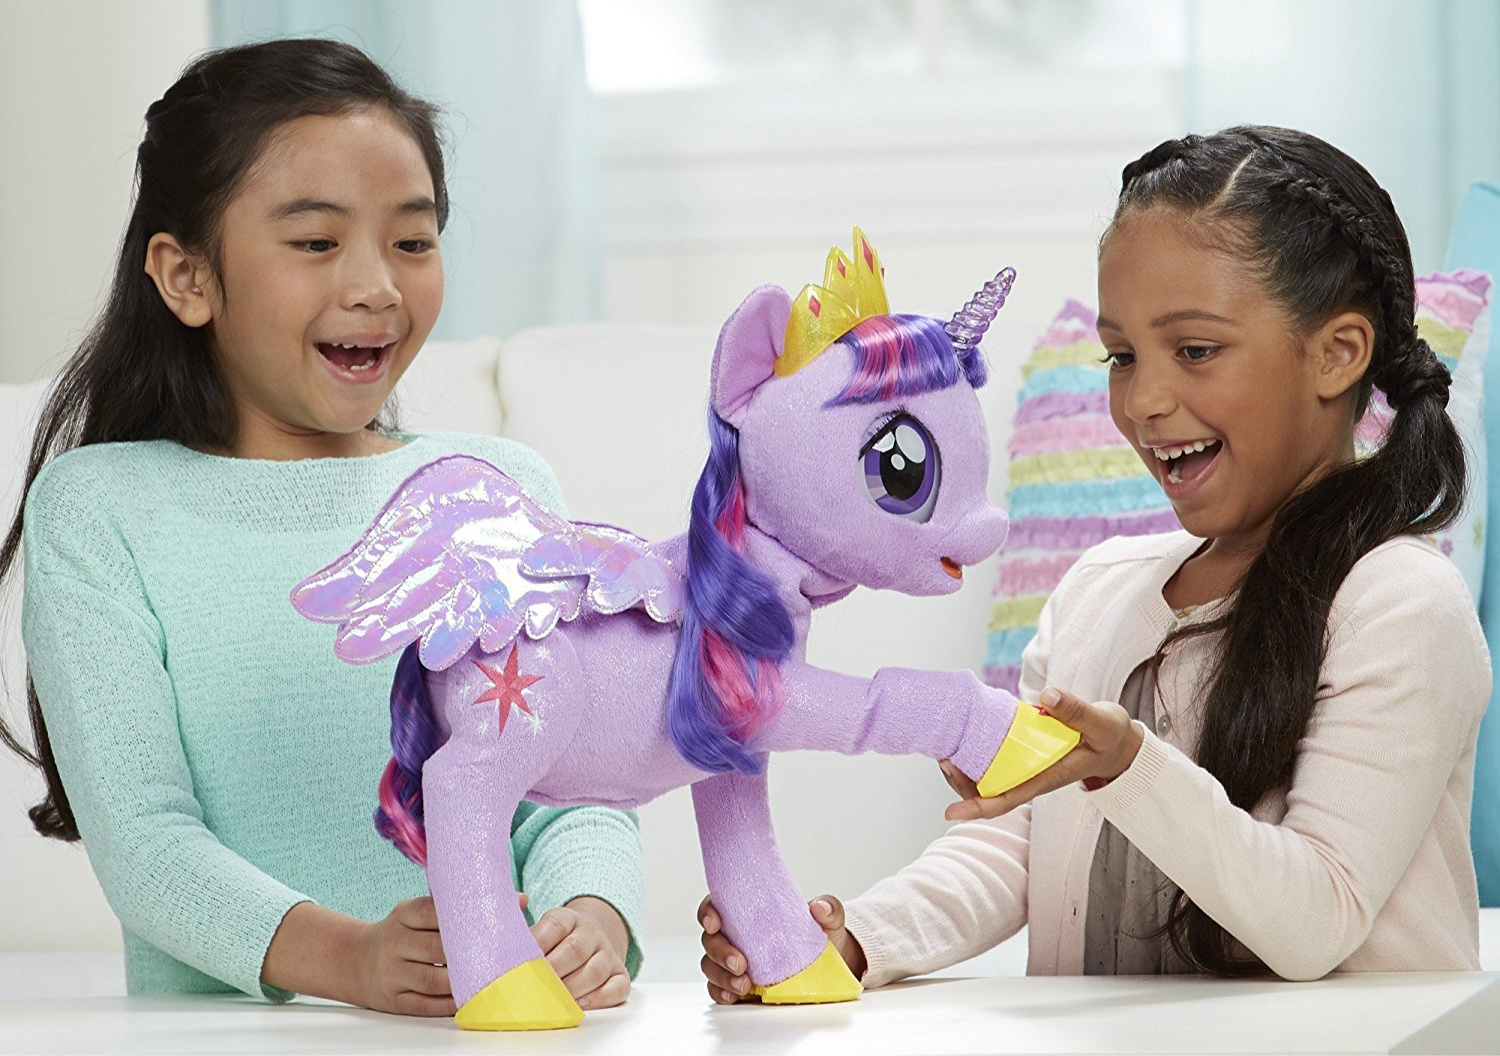 amazon.commy little pony magical princess twilight sparkle giant talking toy